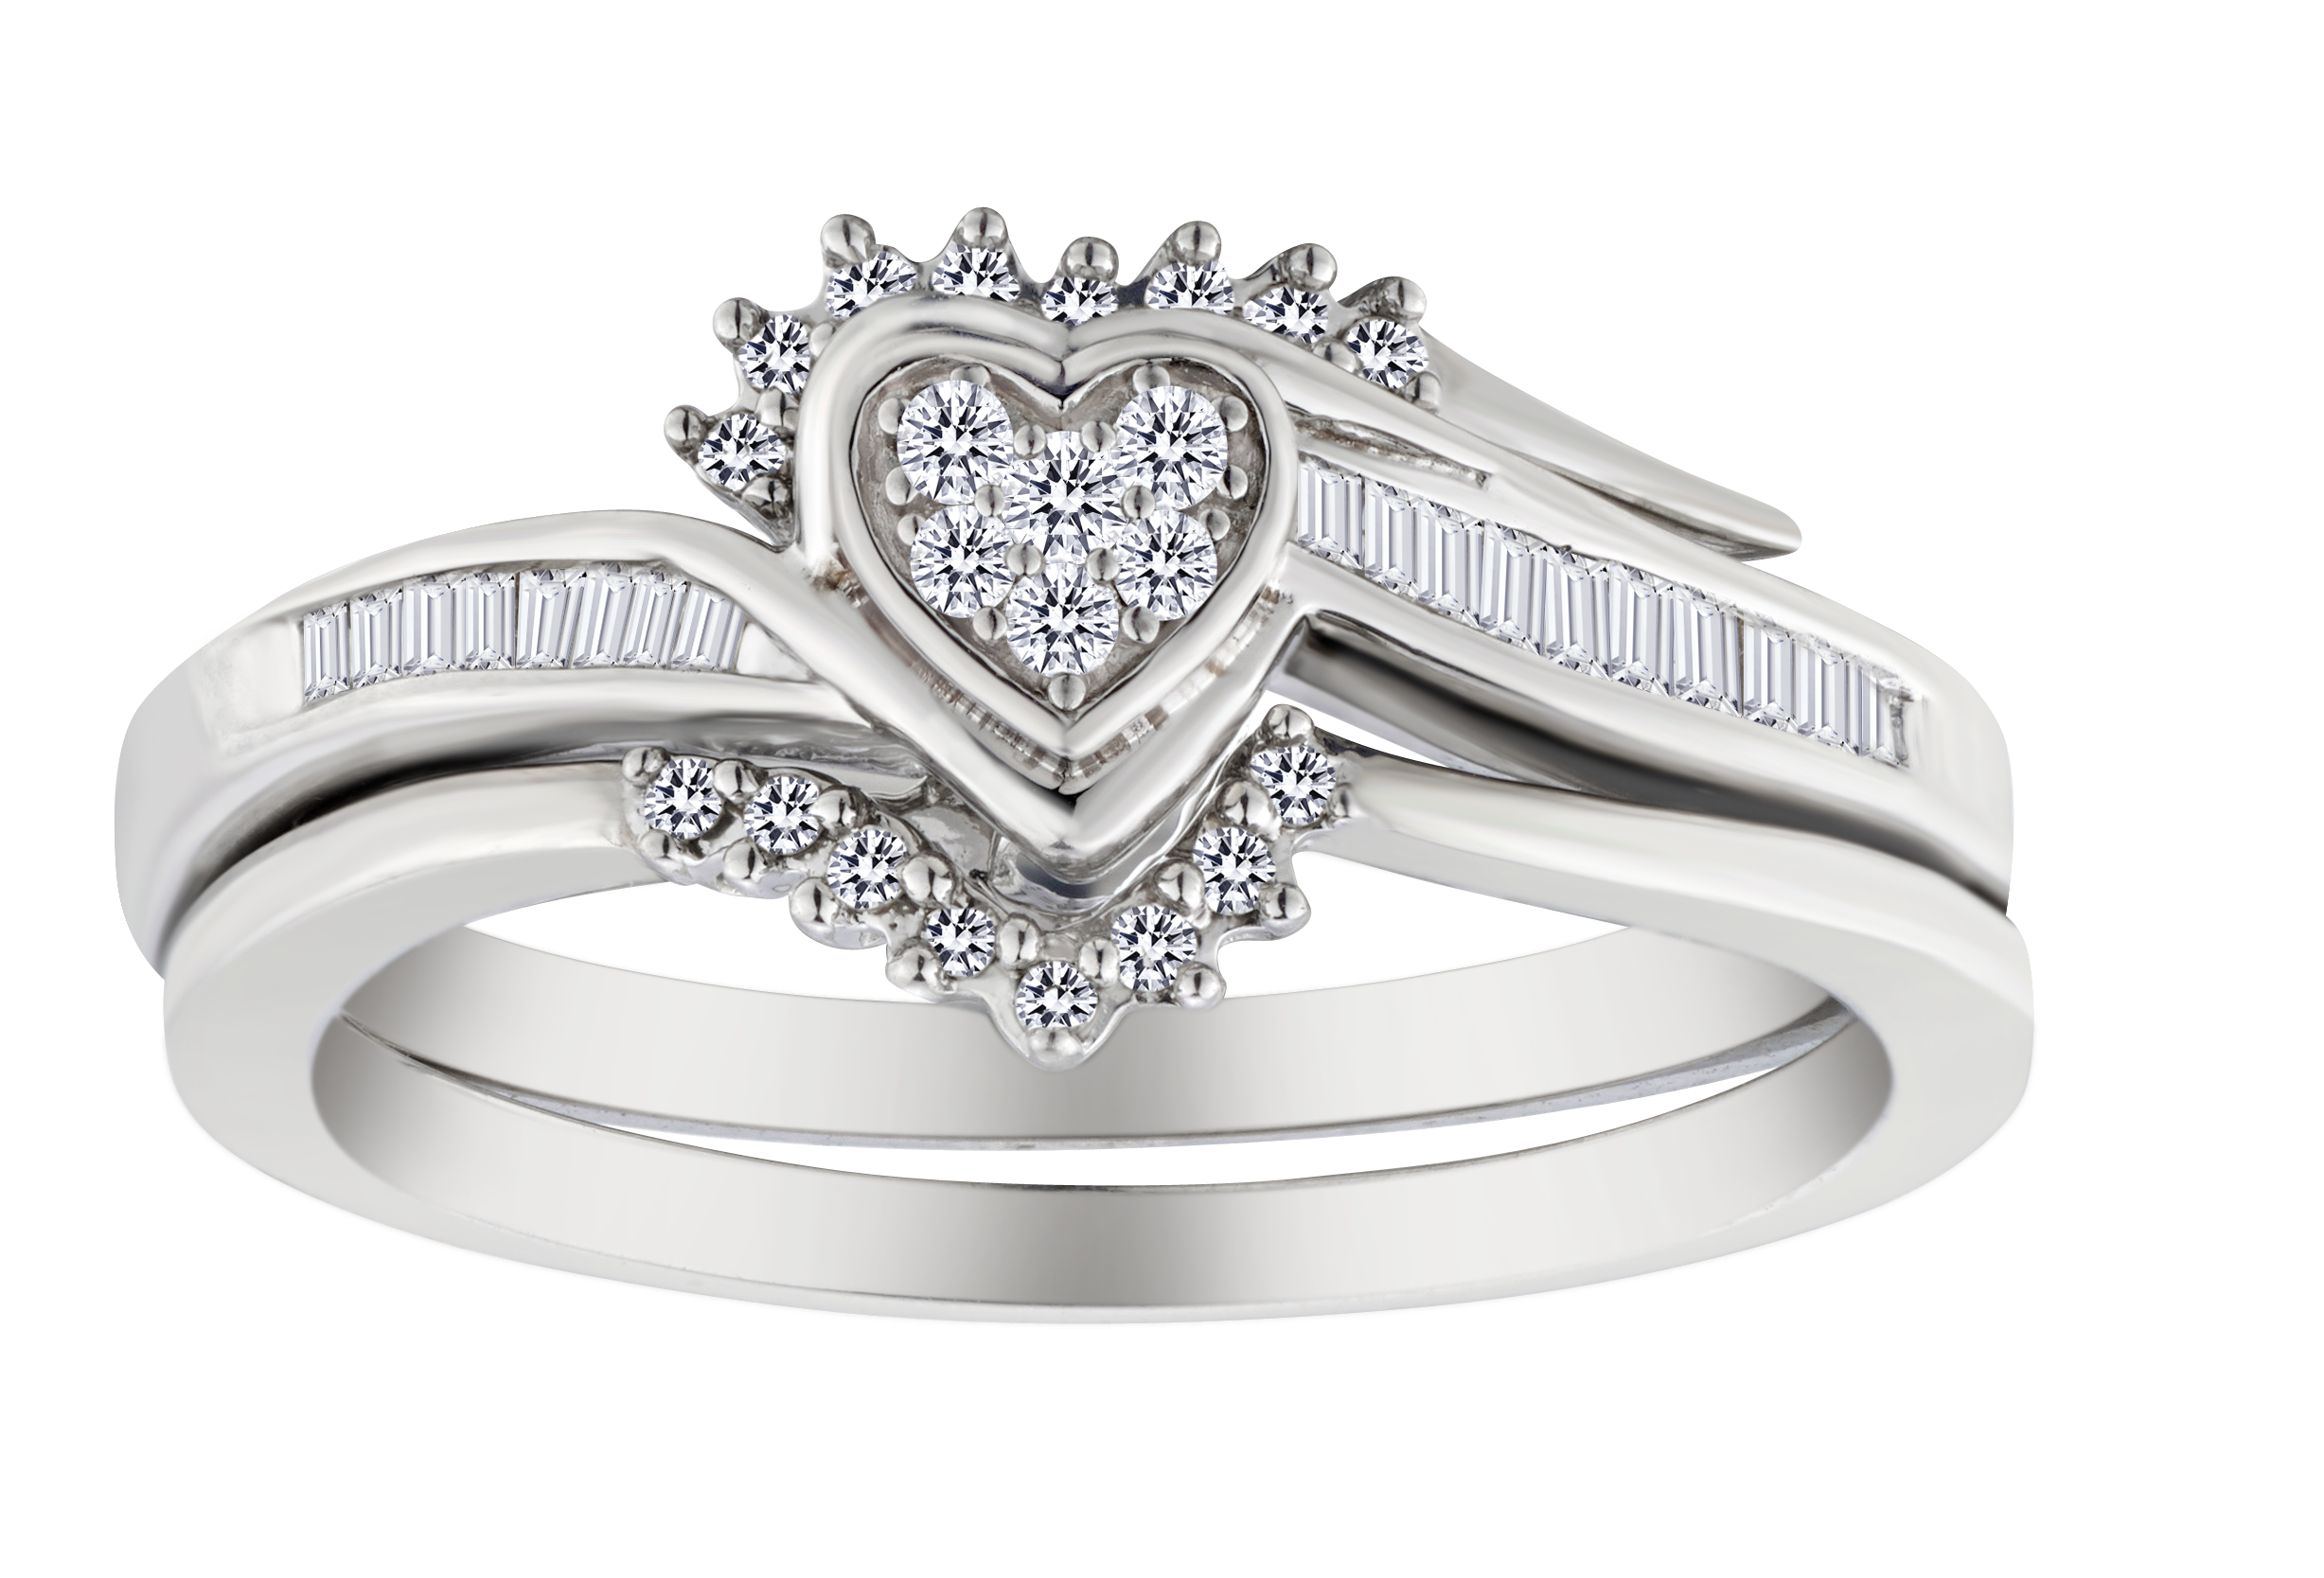 .25 Carat of Diamonds, "Heart" Ring Set, Silver.....................NOW